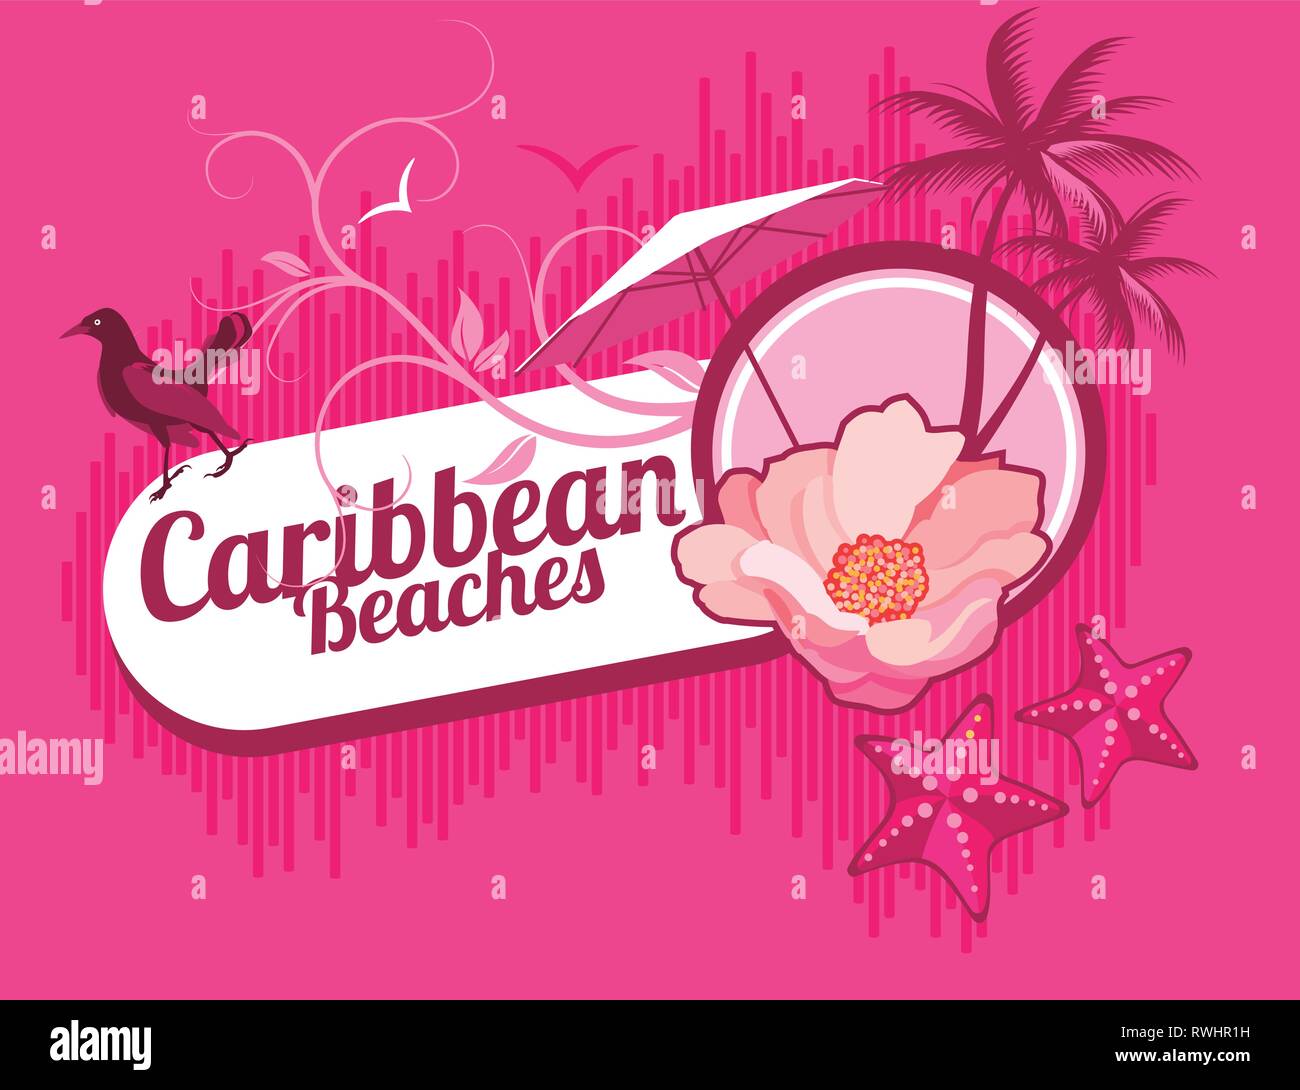 Caribbean Beaches Stock Vector